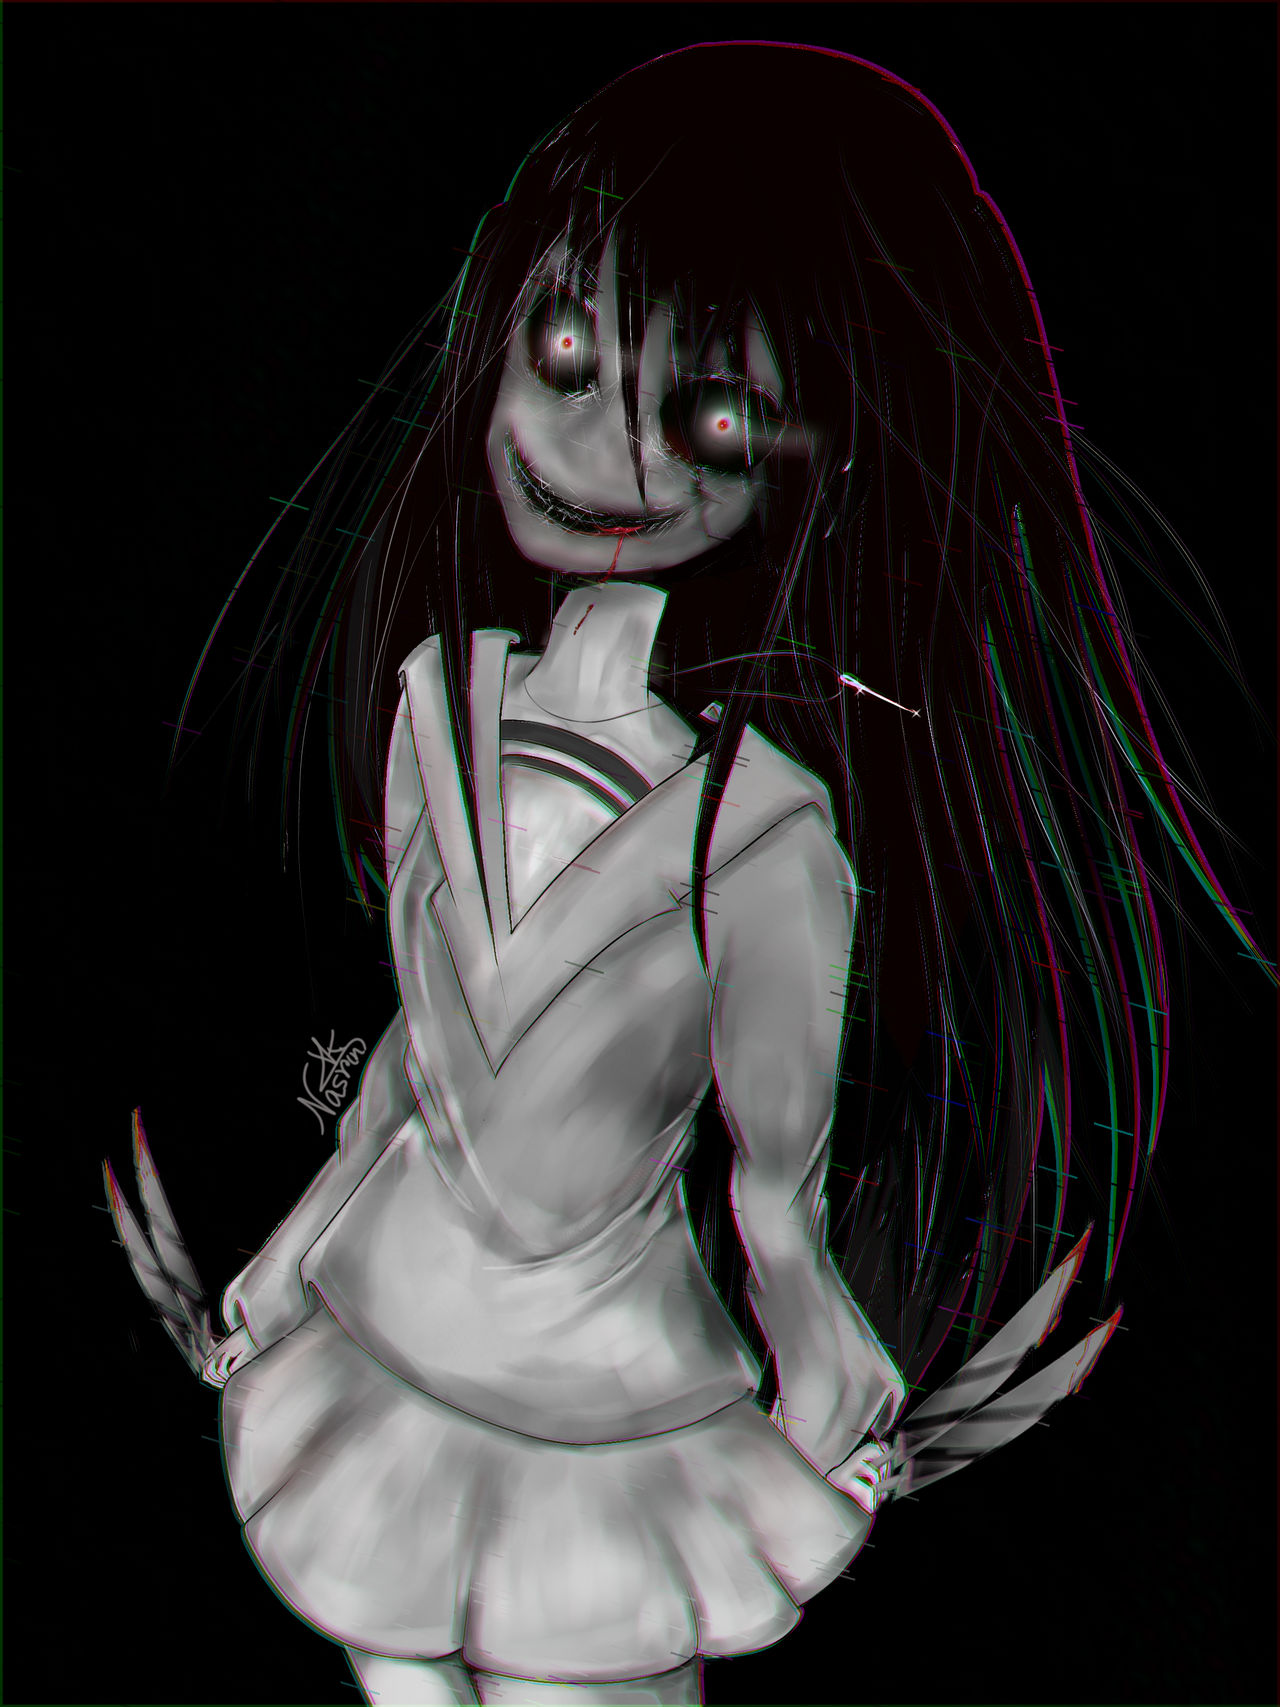 Creepy Anime Ghost by NasrinAnoirX on DeviantArt